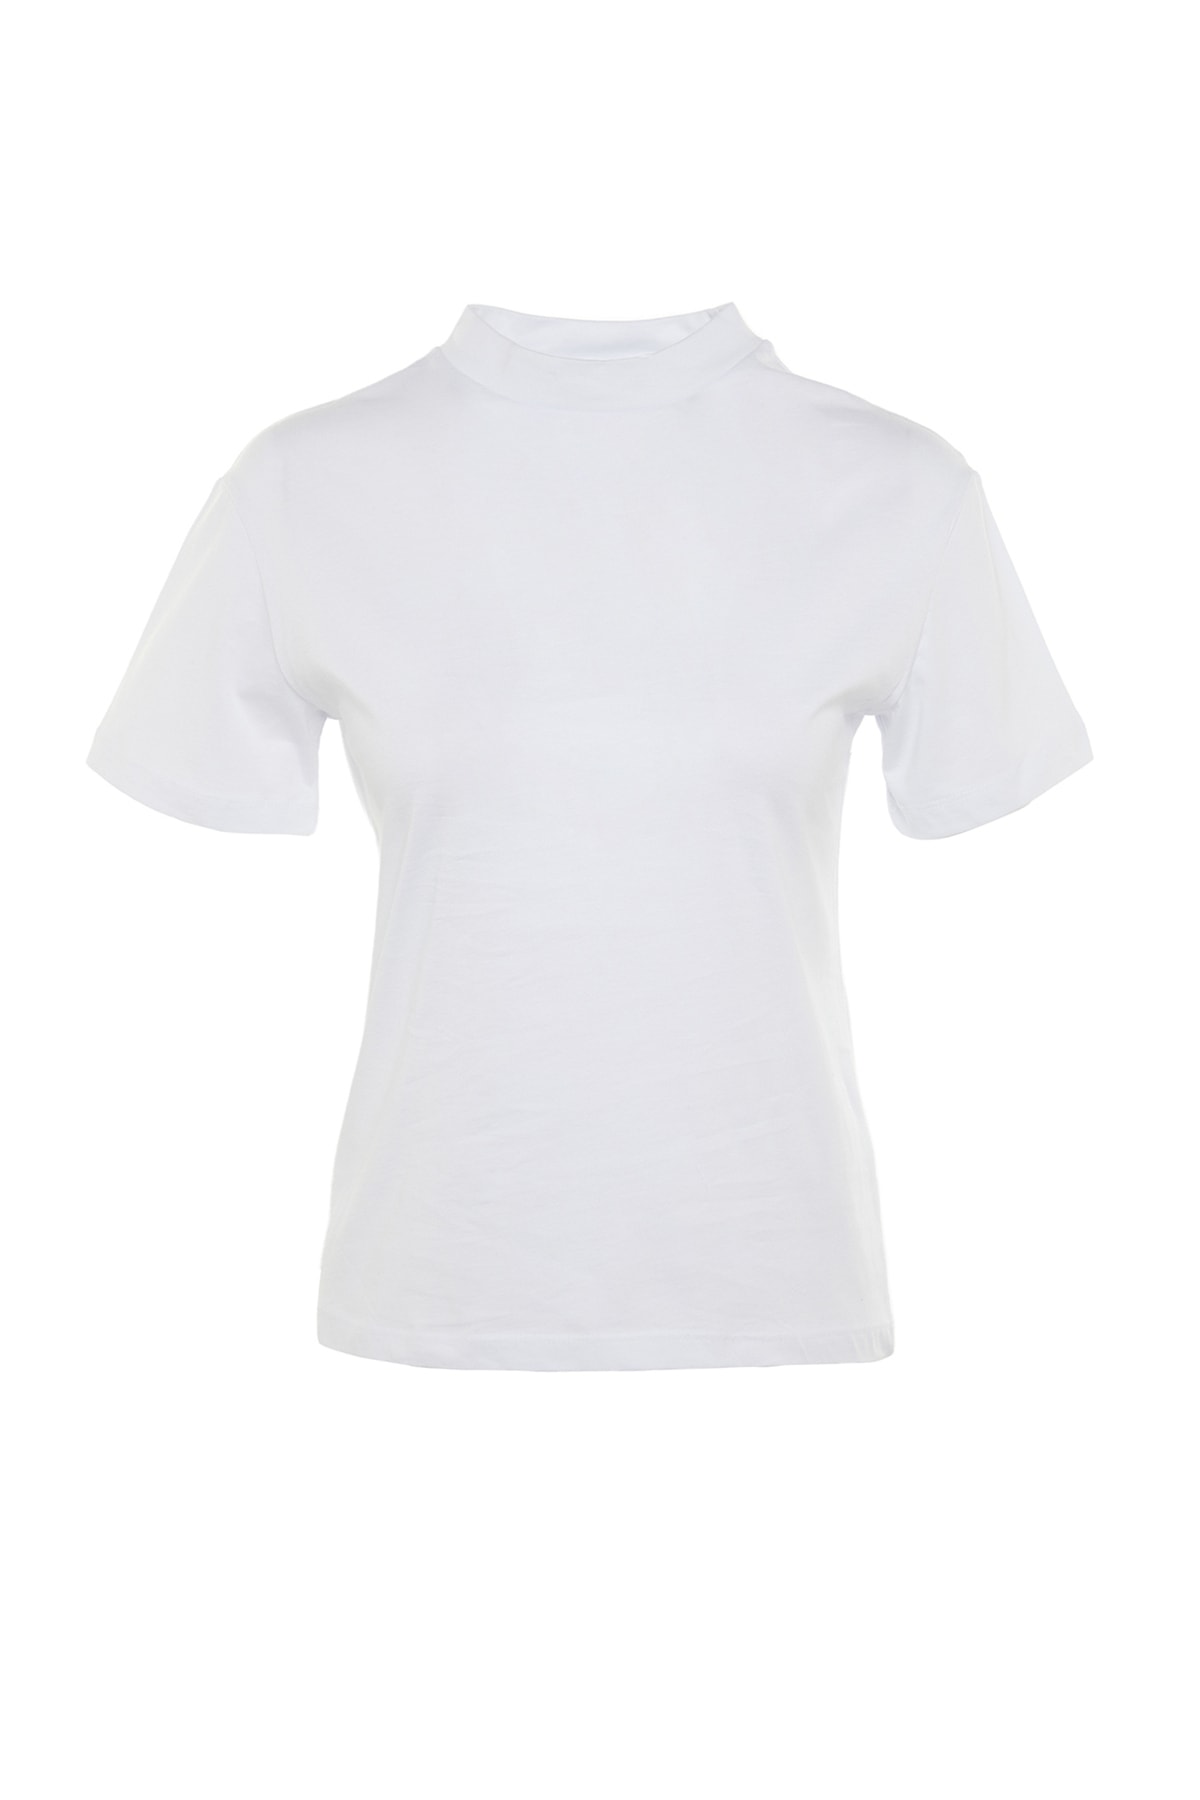 تیشرت سفید زنانه TRENDYOLMİLLA کد TS0096